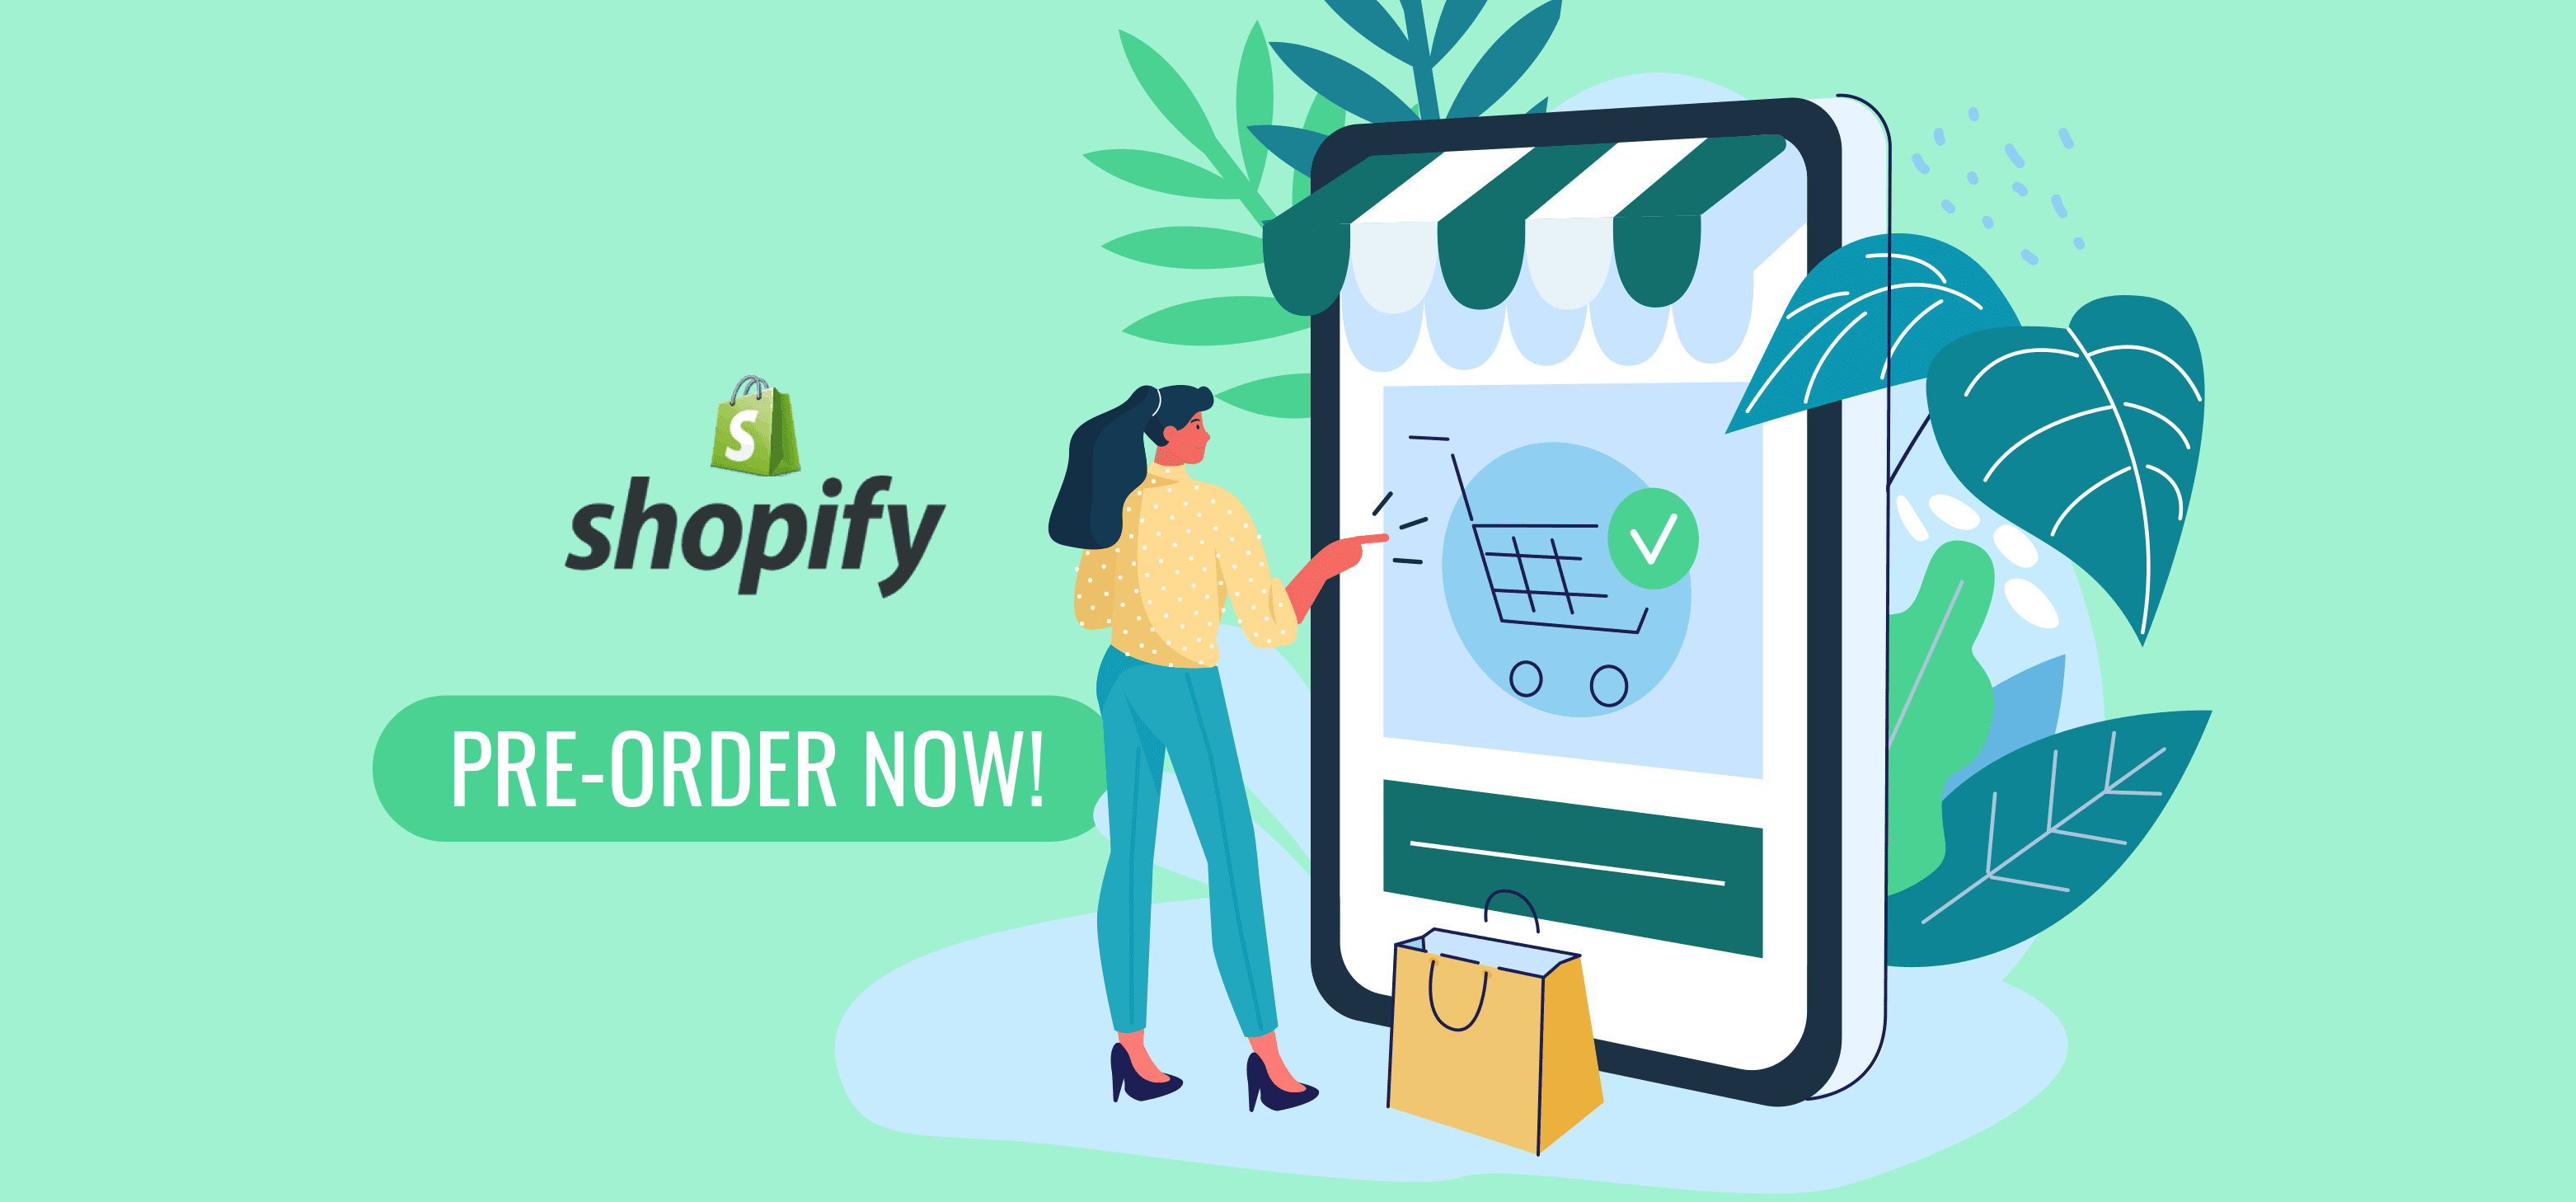 best pre order app for shopify